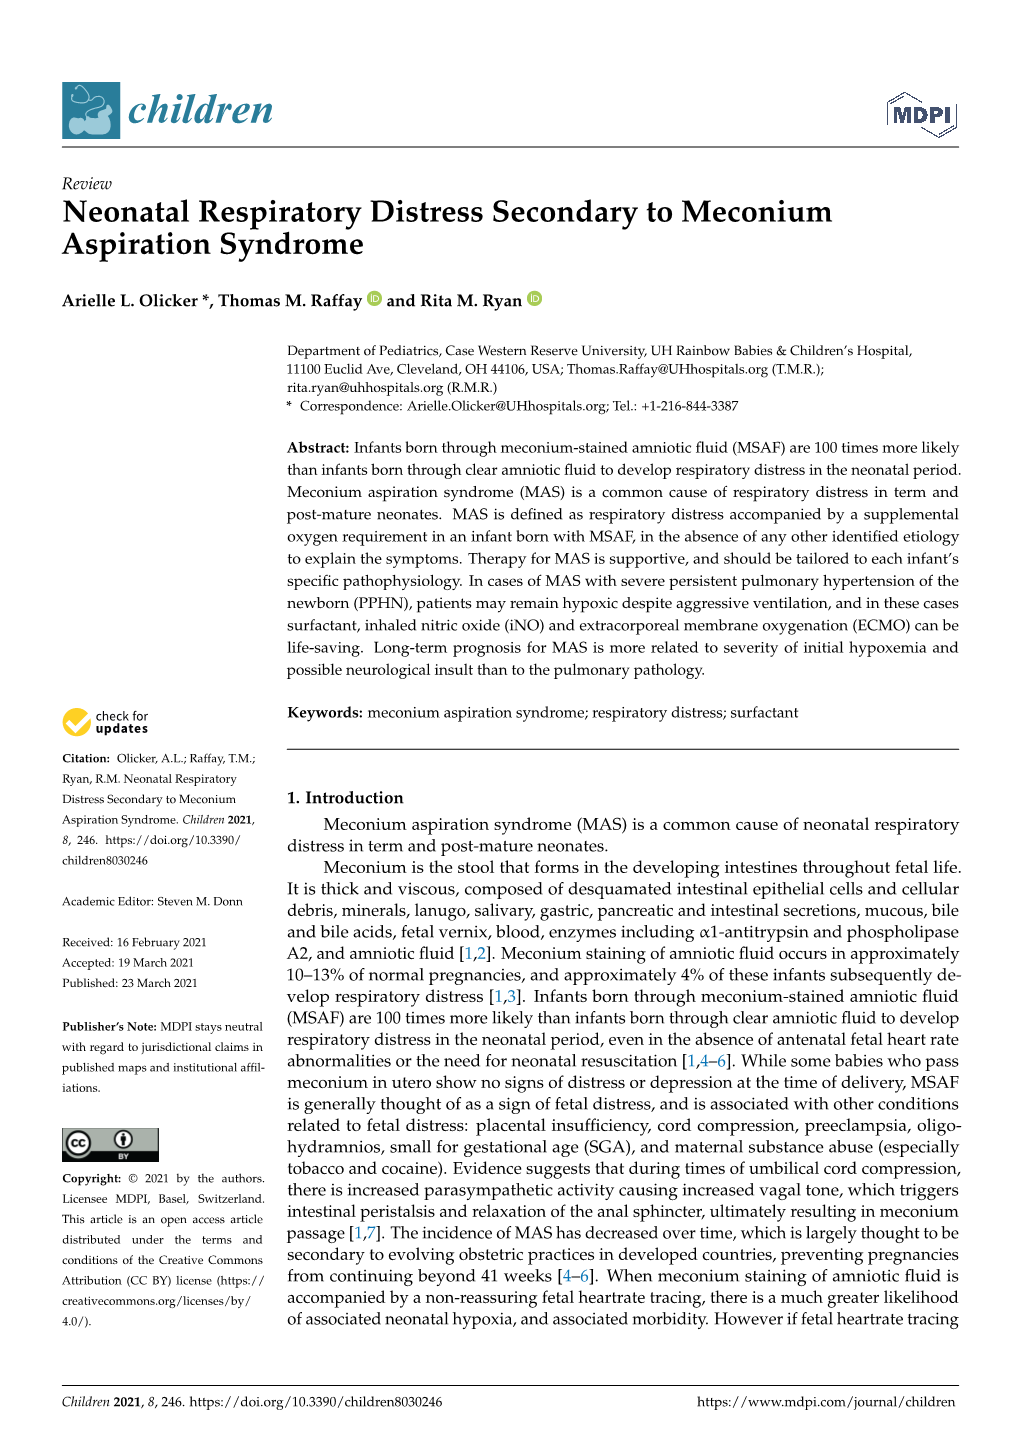 Neonatal Respiratory Distress Secondary to Meconium Aspiration Syndrome